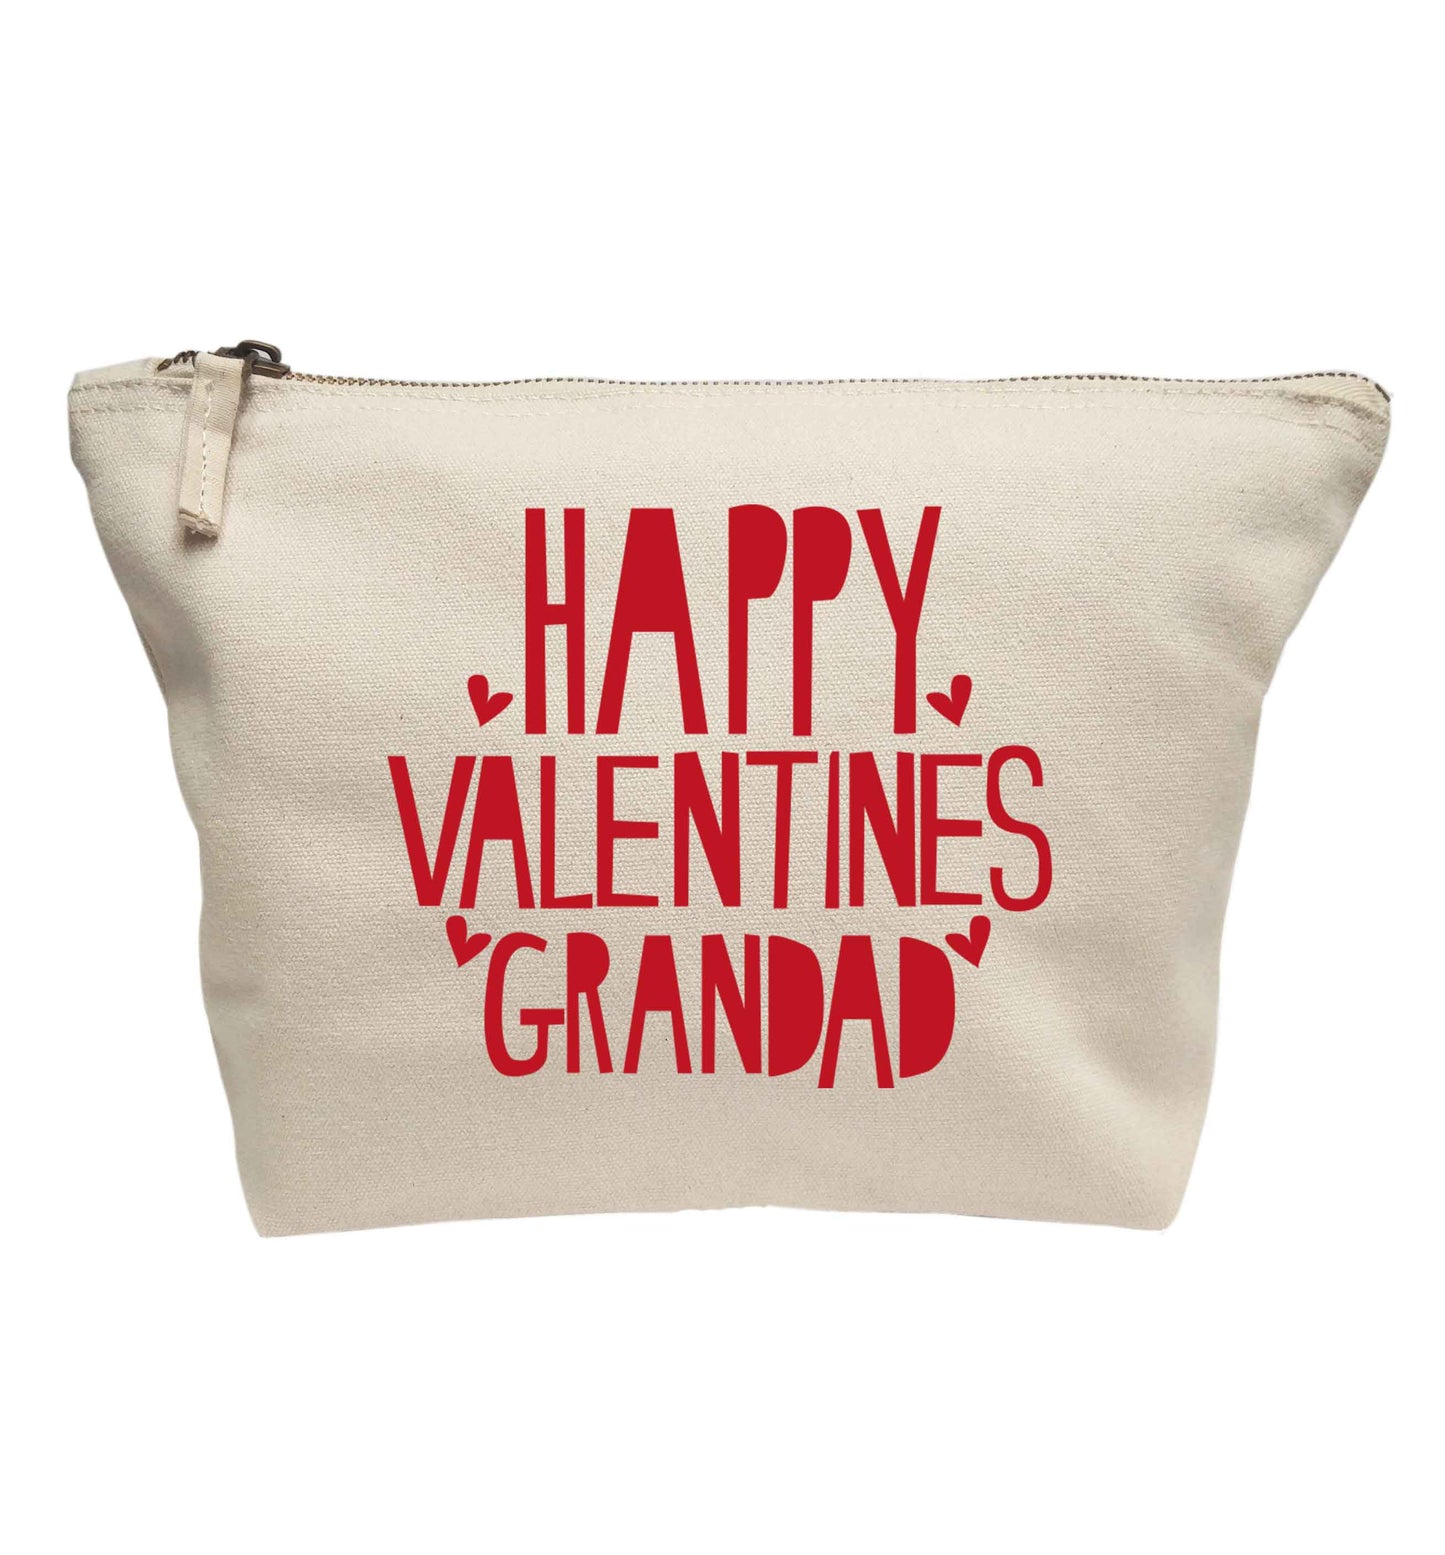 Happy valentines grandad | Makeup / wash bag